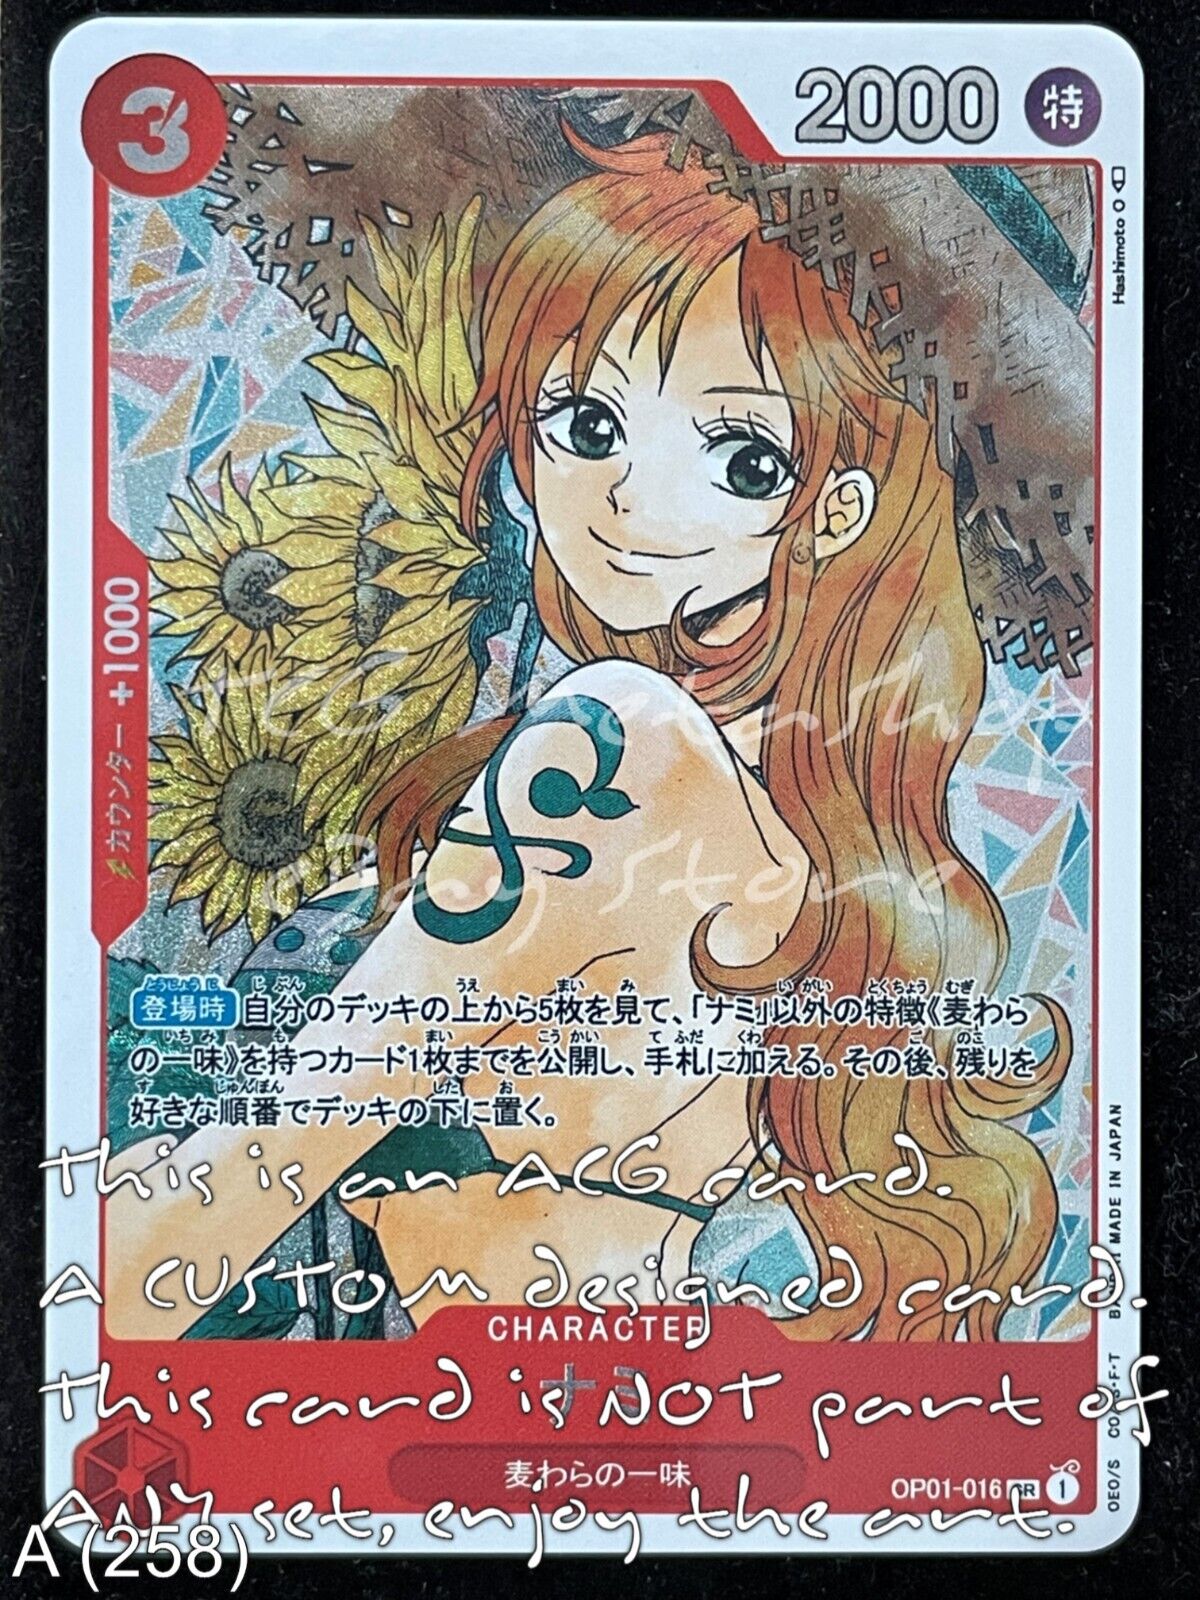 🔥 A 258 Nami One Piece Goddess Story Anime Waifu Card ACG 🔥